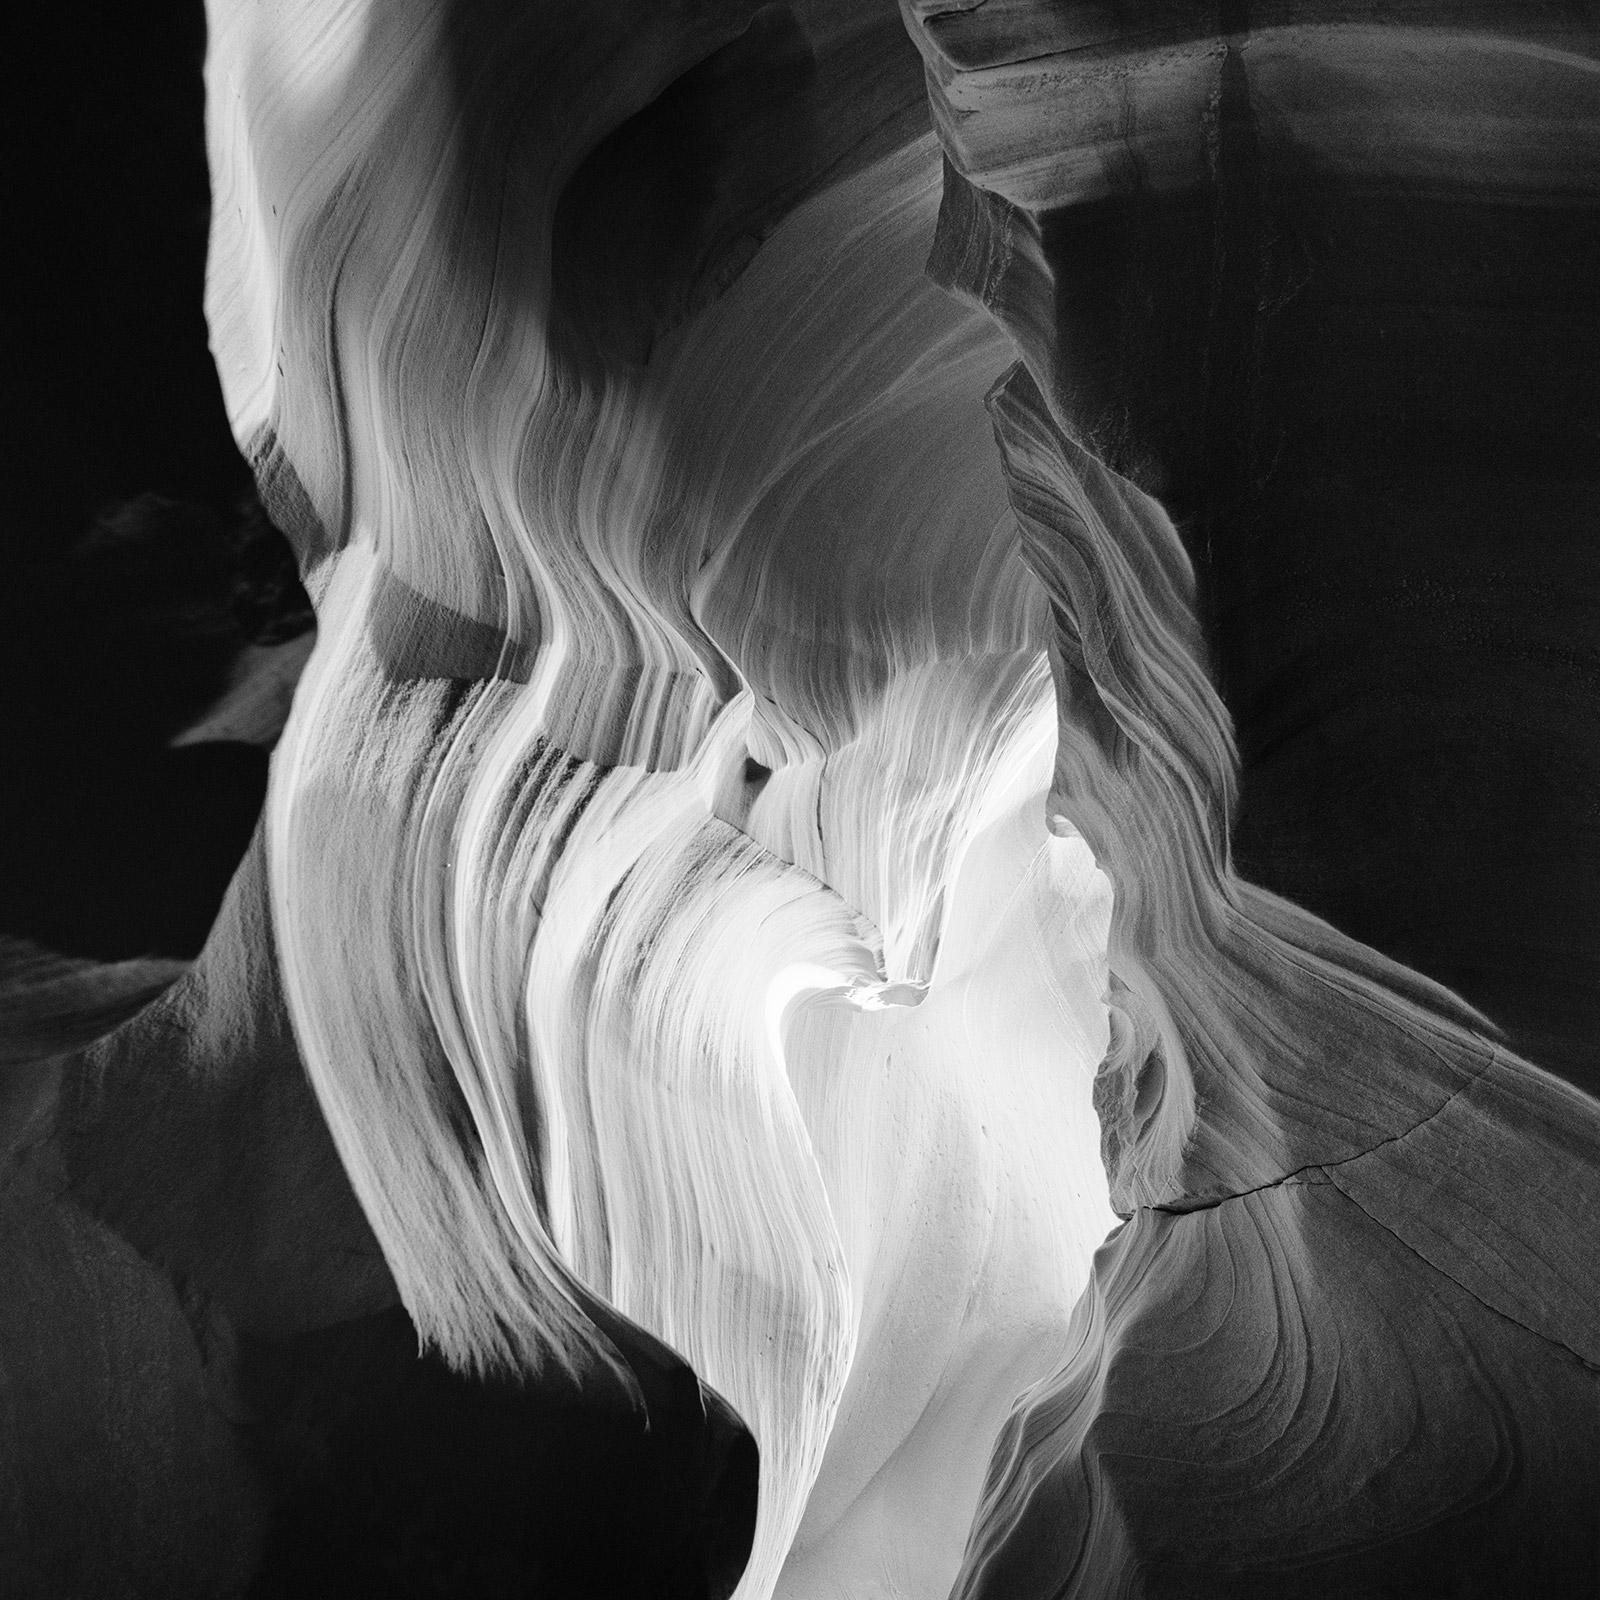 Black and White Photograph Gerald Berghammer - Whiting, Antelope Canyon, désert, USA, noir et blanc et photographie, art paysage